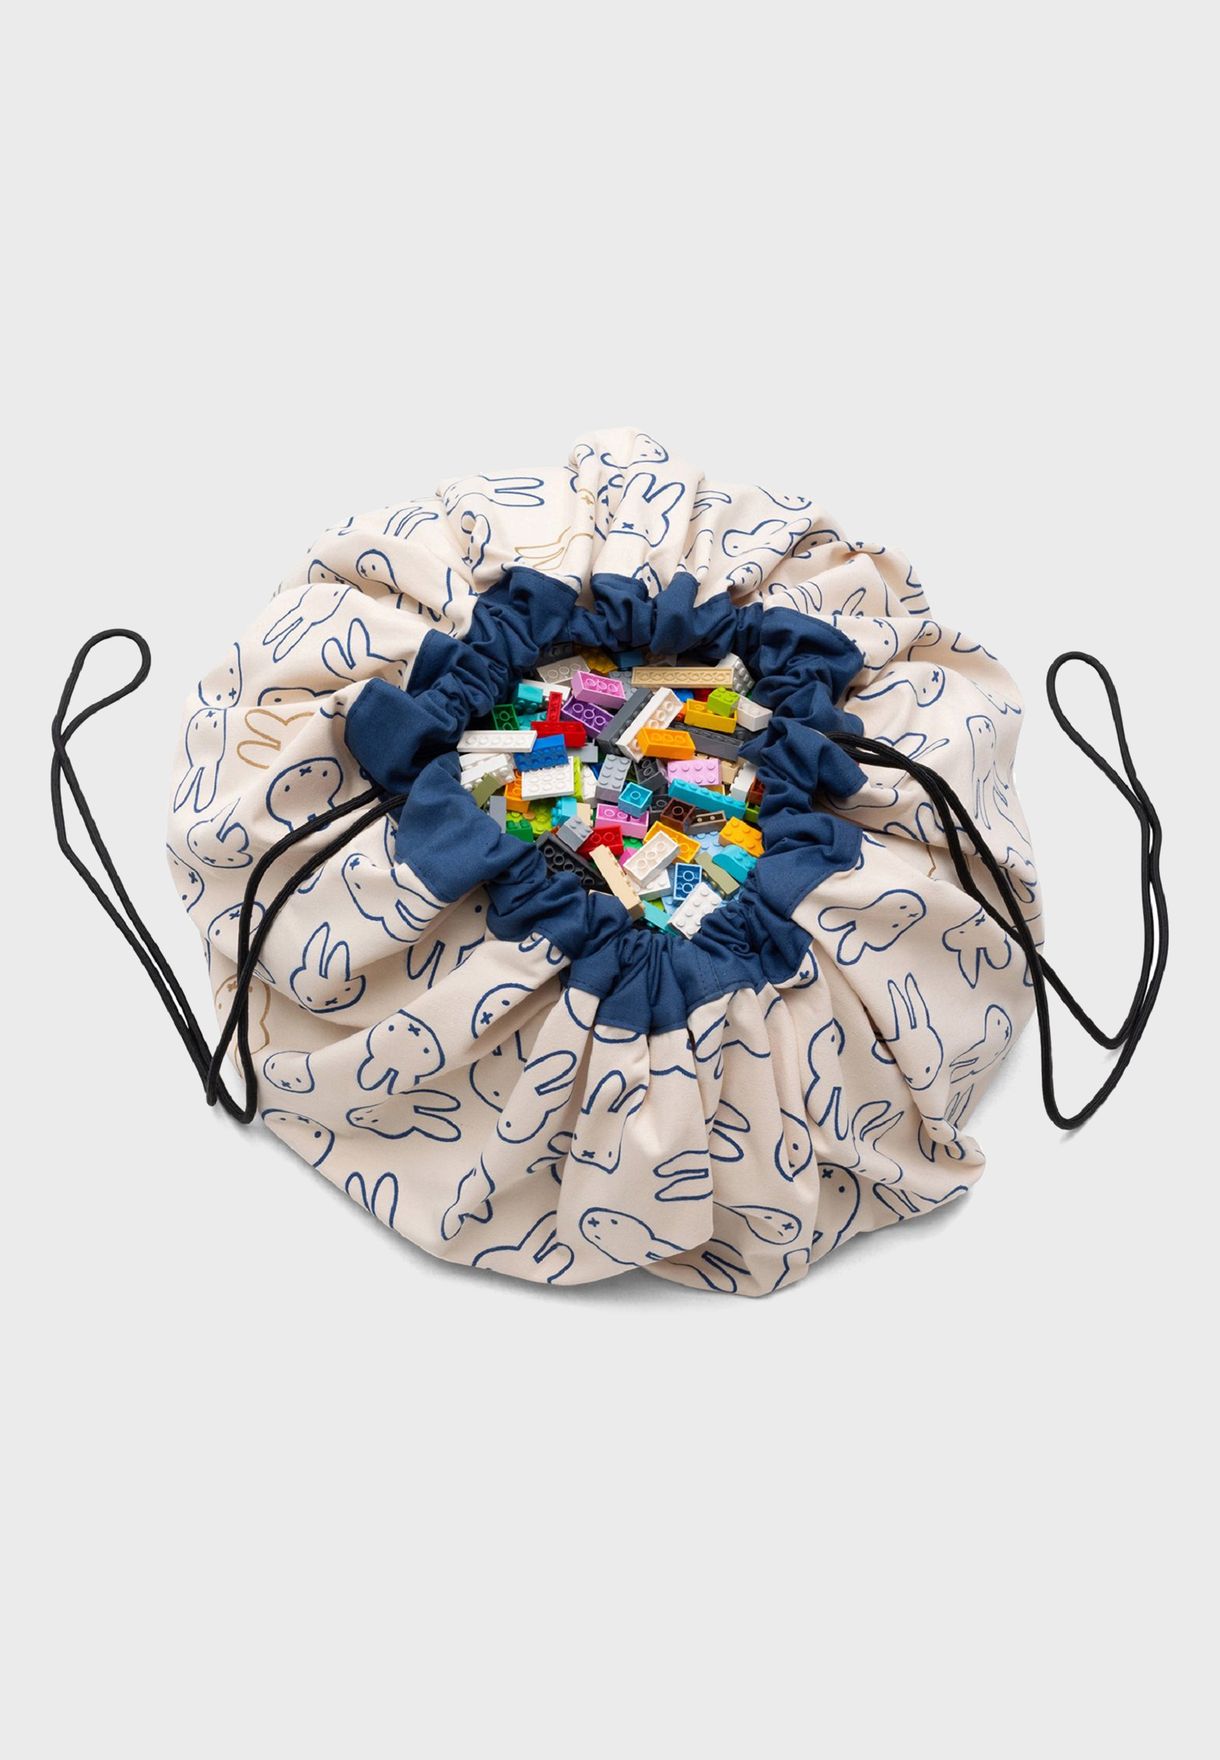 Playmat & Storage Bag - Miffy